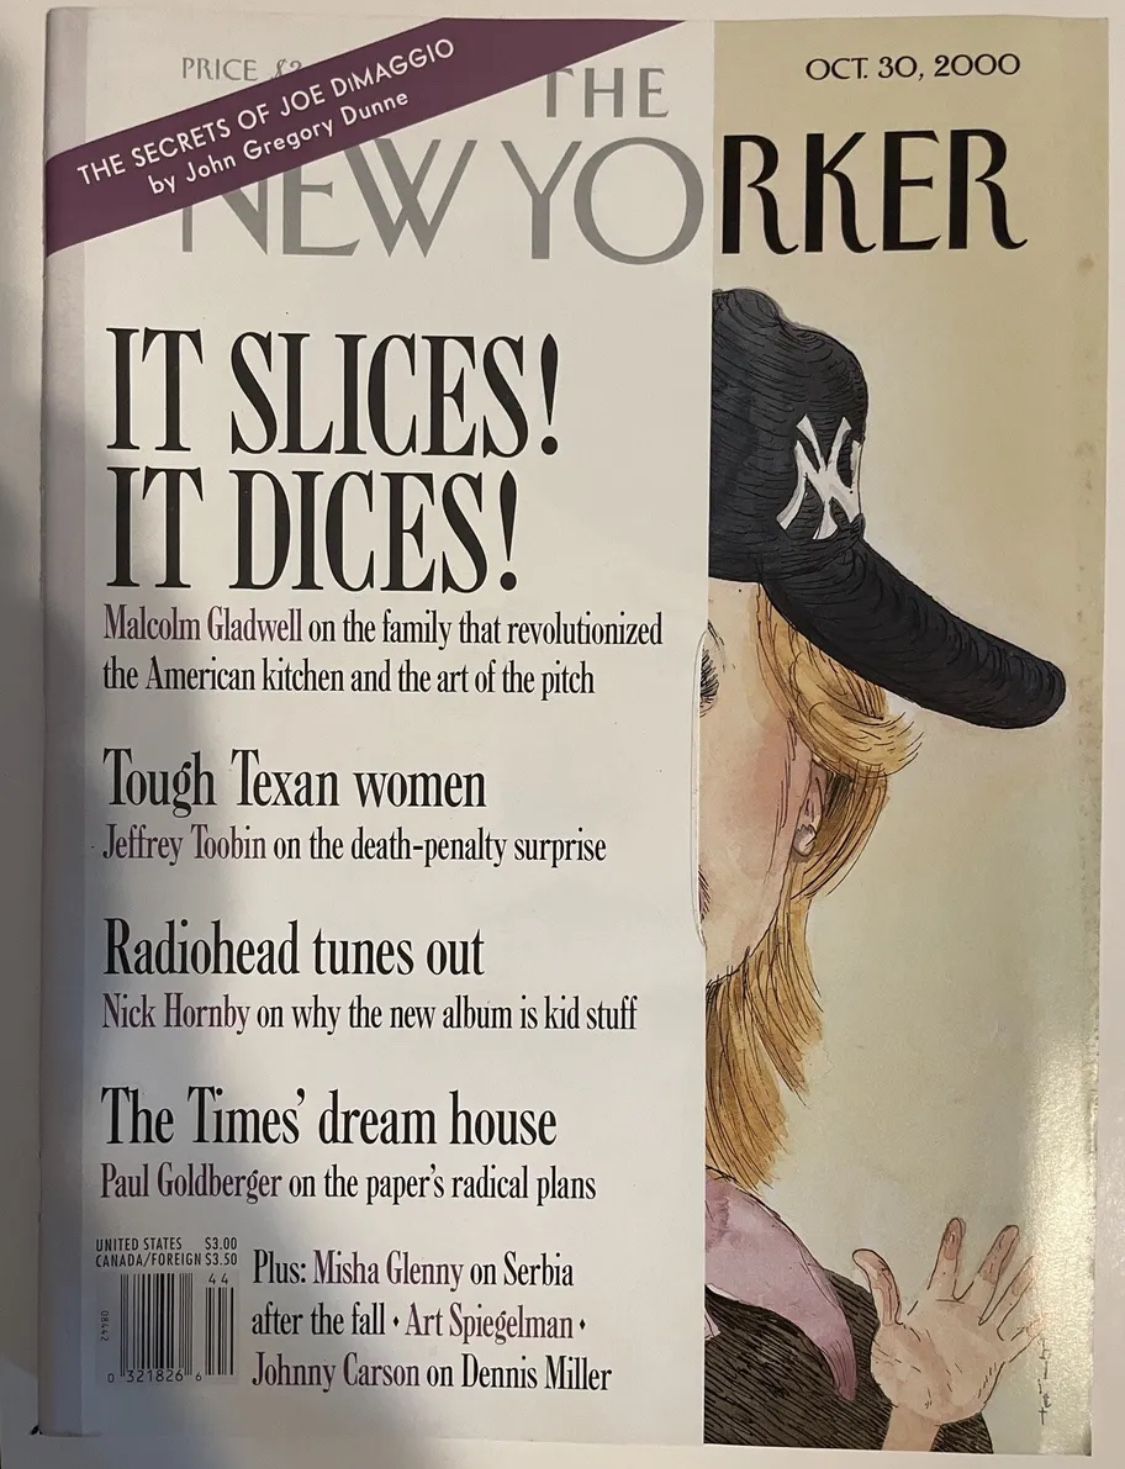 The New Yorker Magazine October 2000 - Helen Dewitt, Radiohead